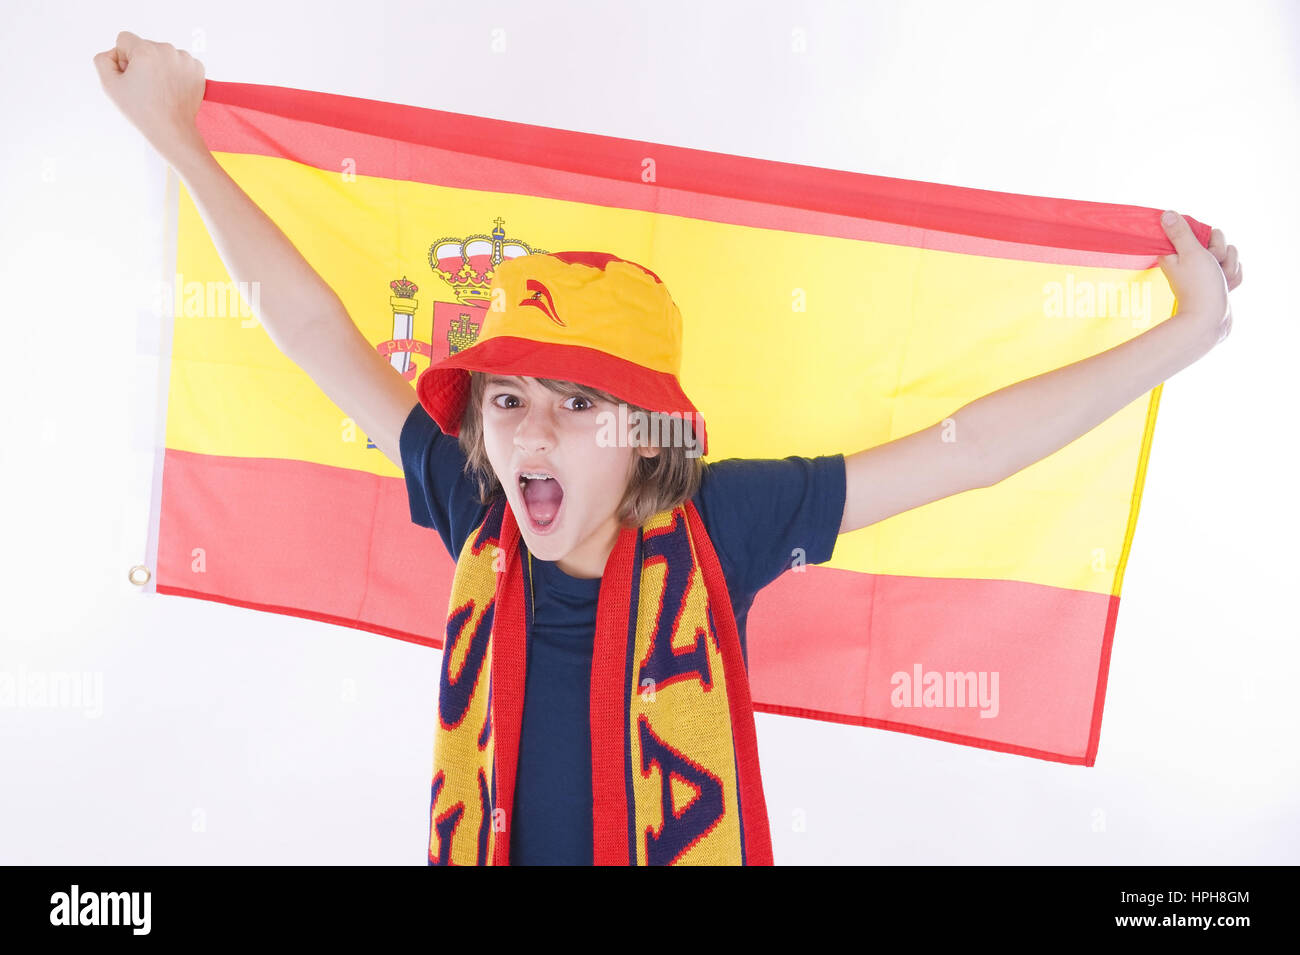 Spanischer Fussballfan - spanish soccer fan, Model released Stock Photo